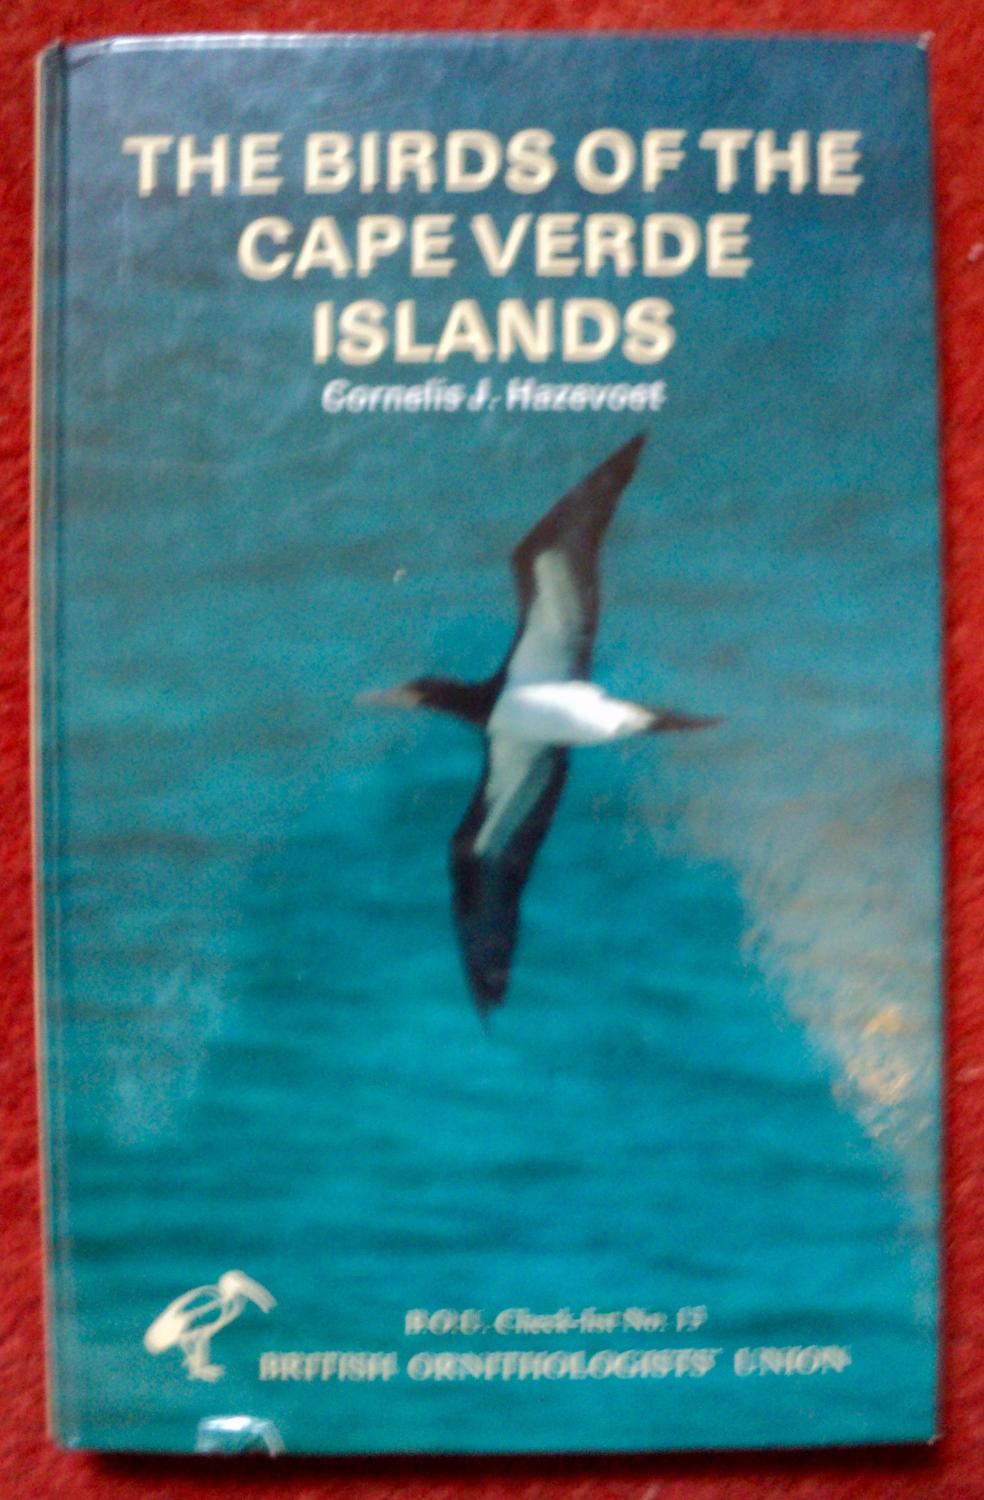 The Birds of the Cape Verde Islands: An Annotated Checklist - Cornelis J. Hazevoet